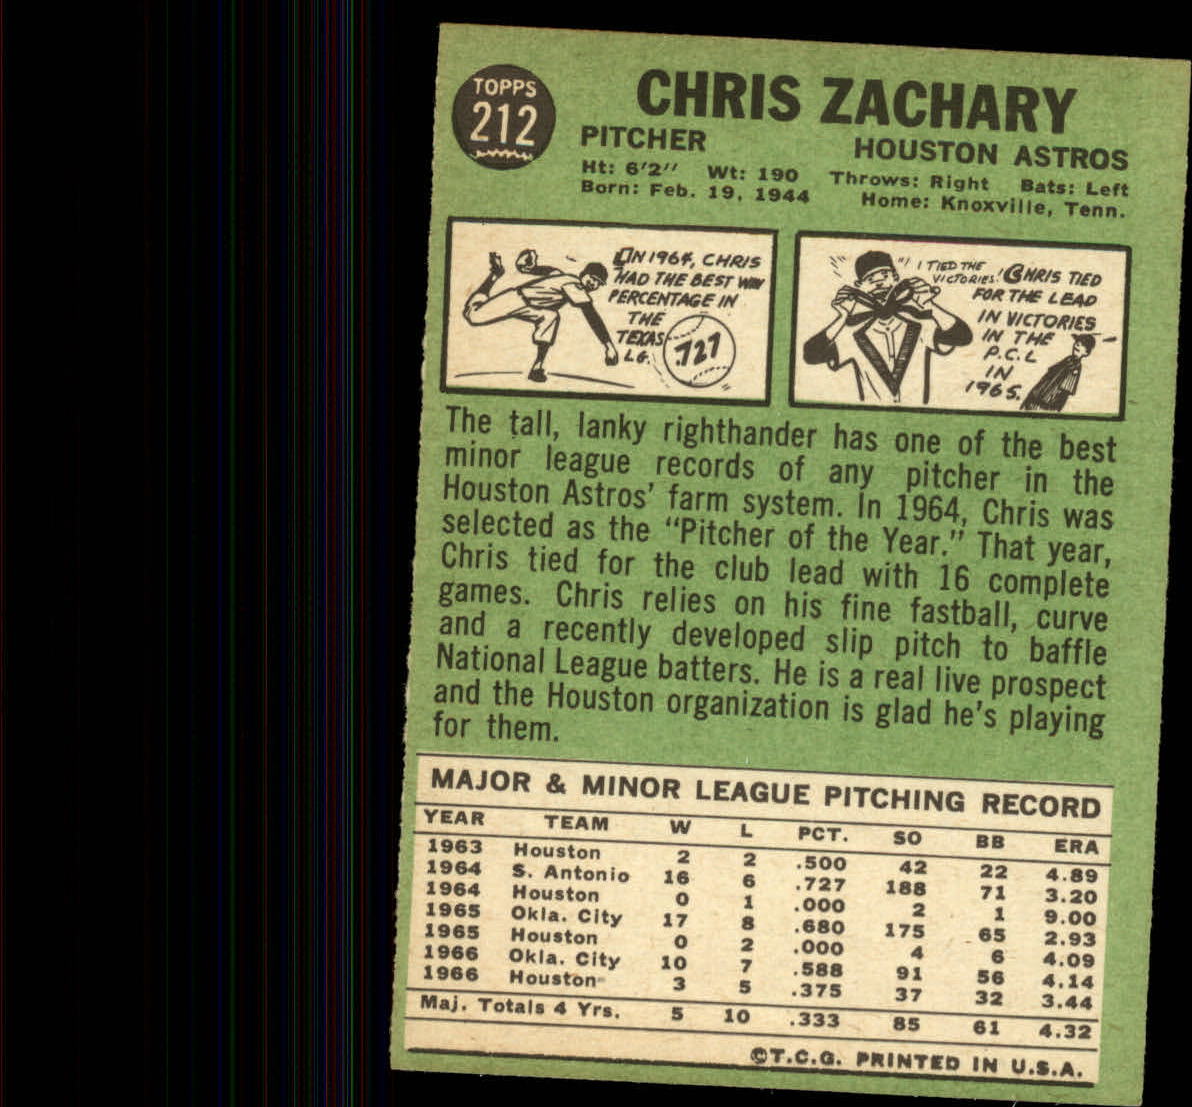 1967 Topps #212 Chris Zachary back image